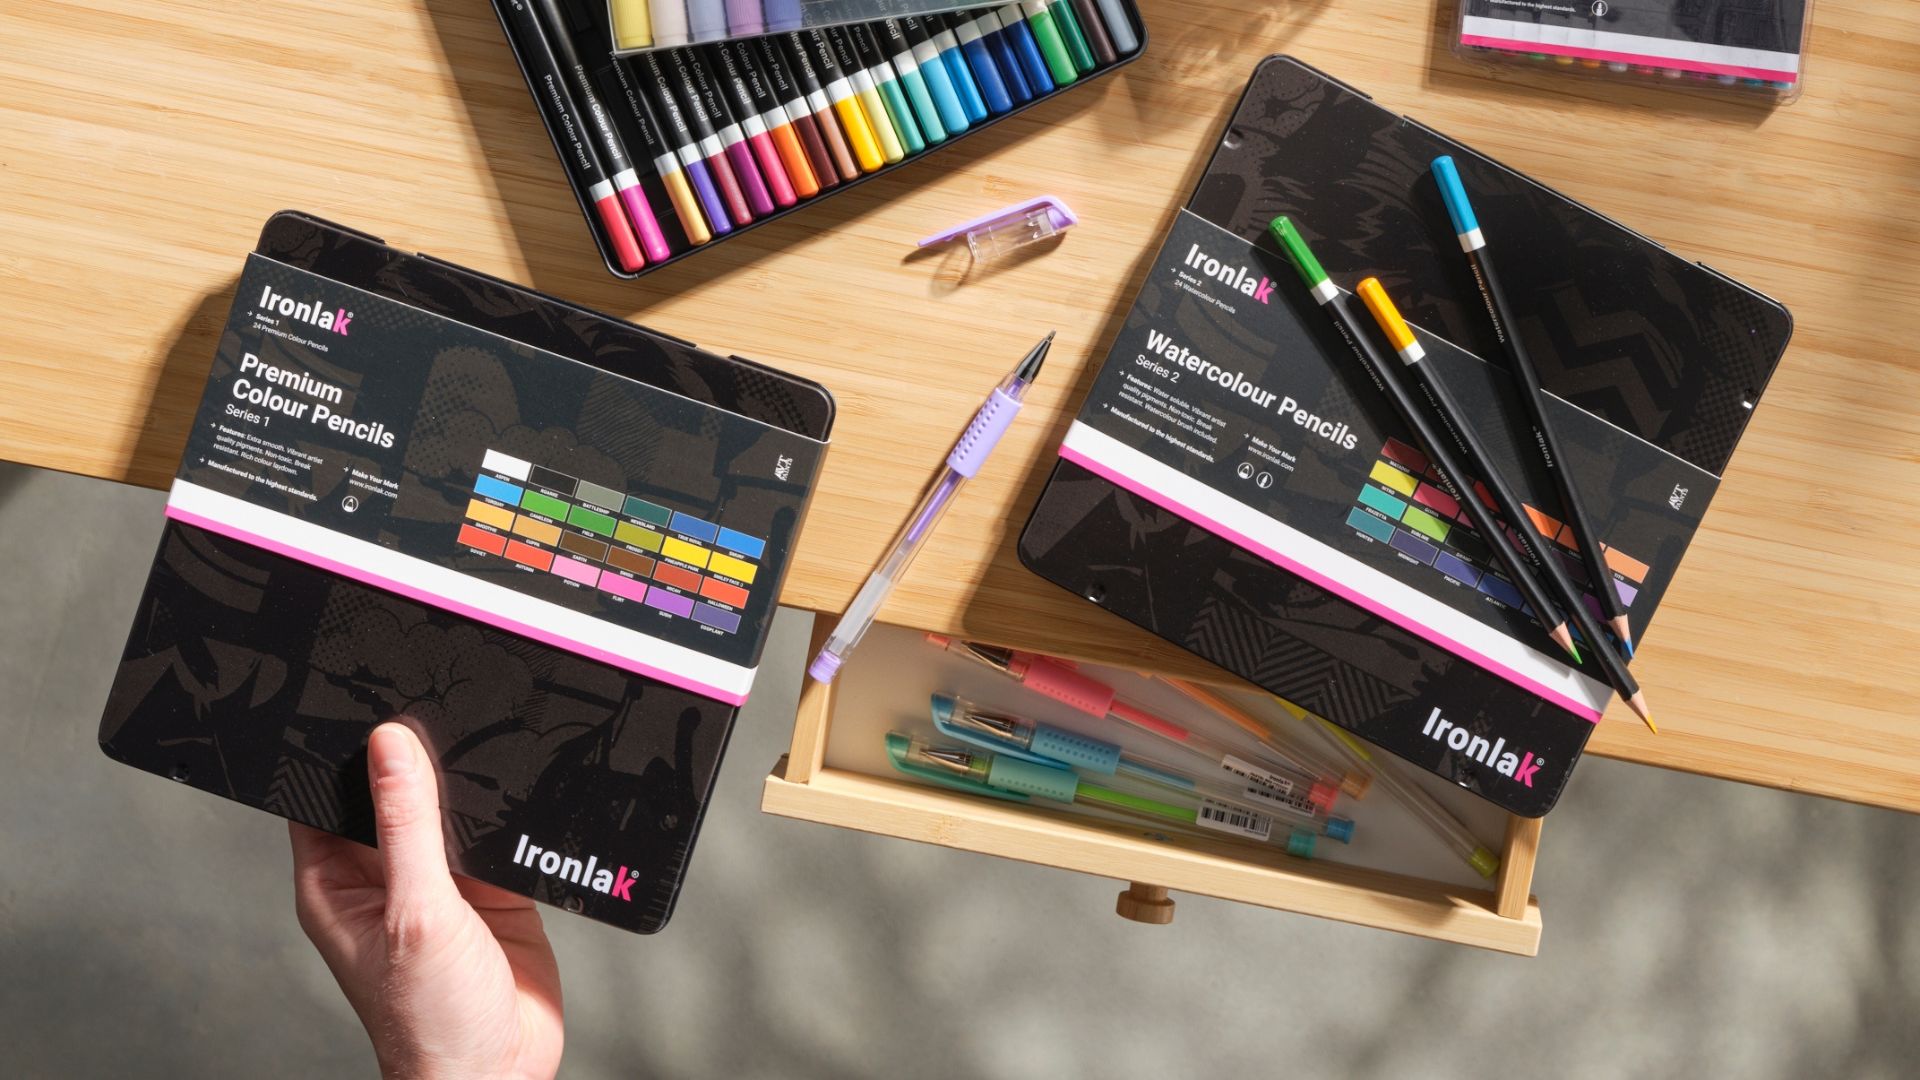 Ironlak Premium Colour Pencil Sets